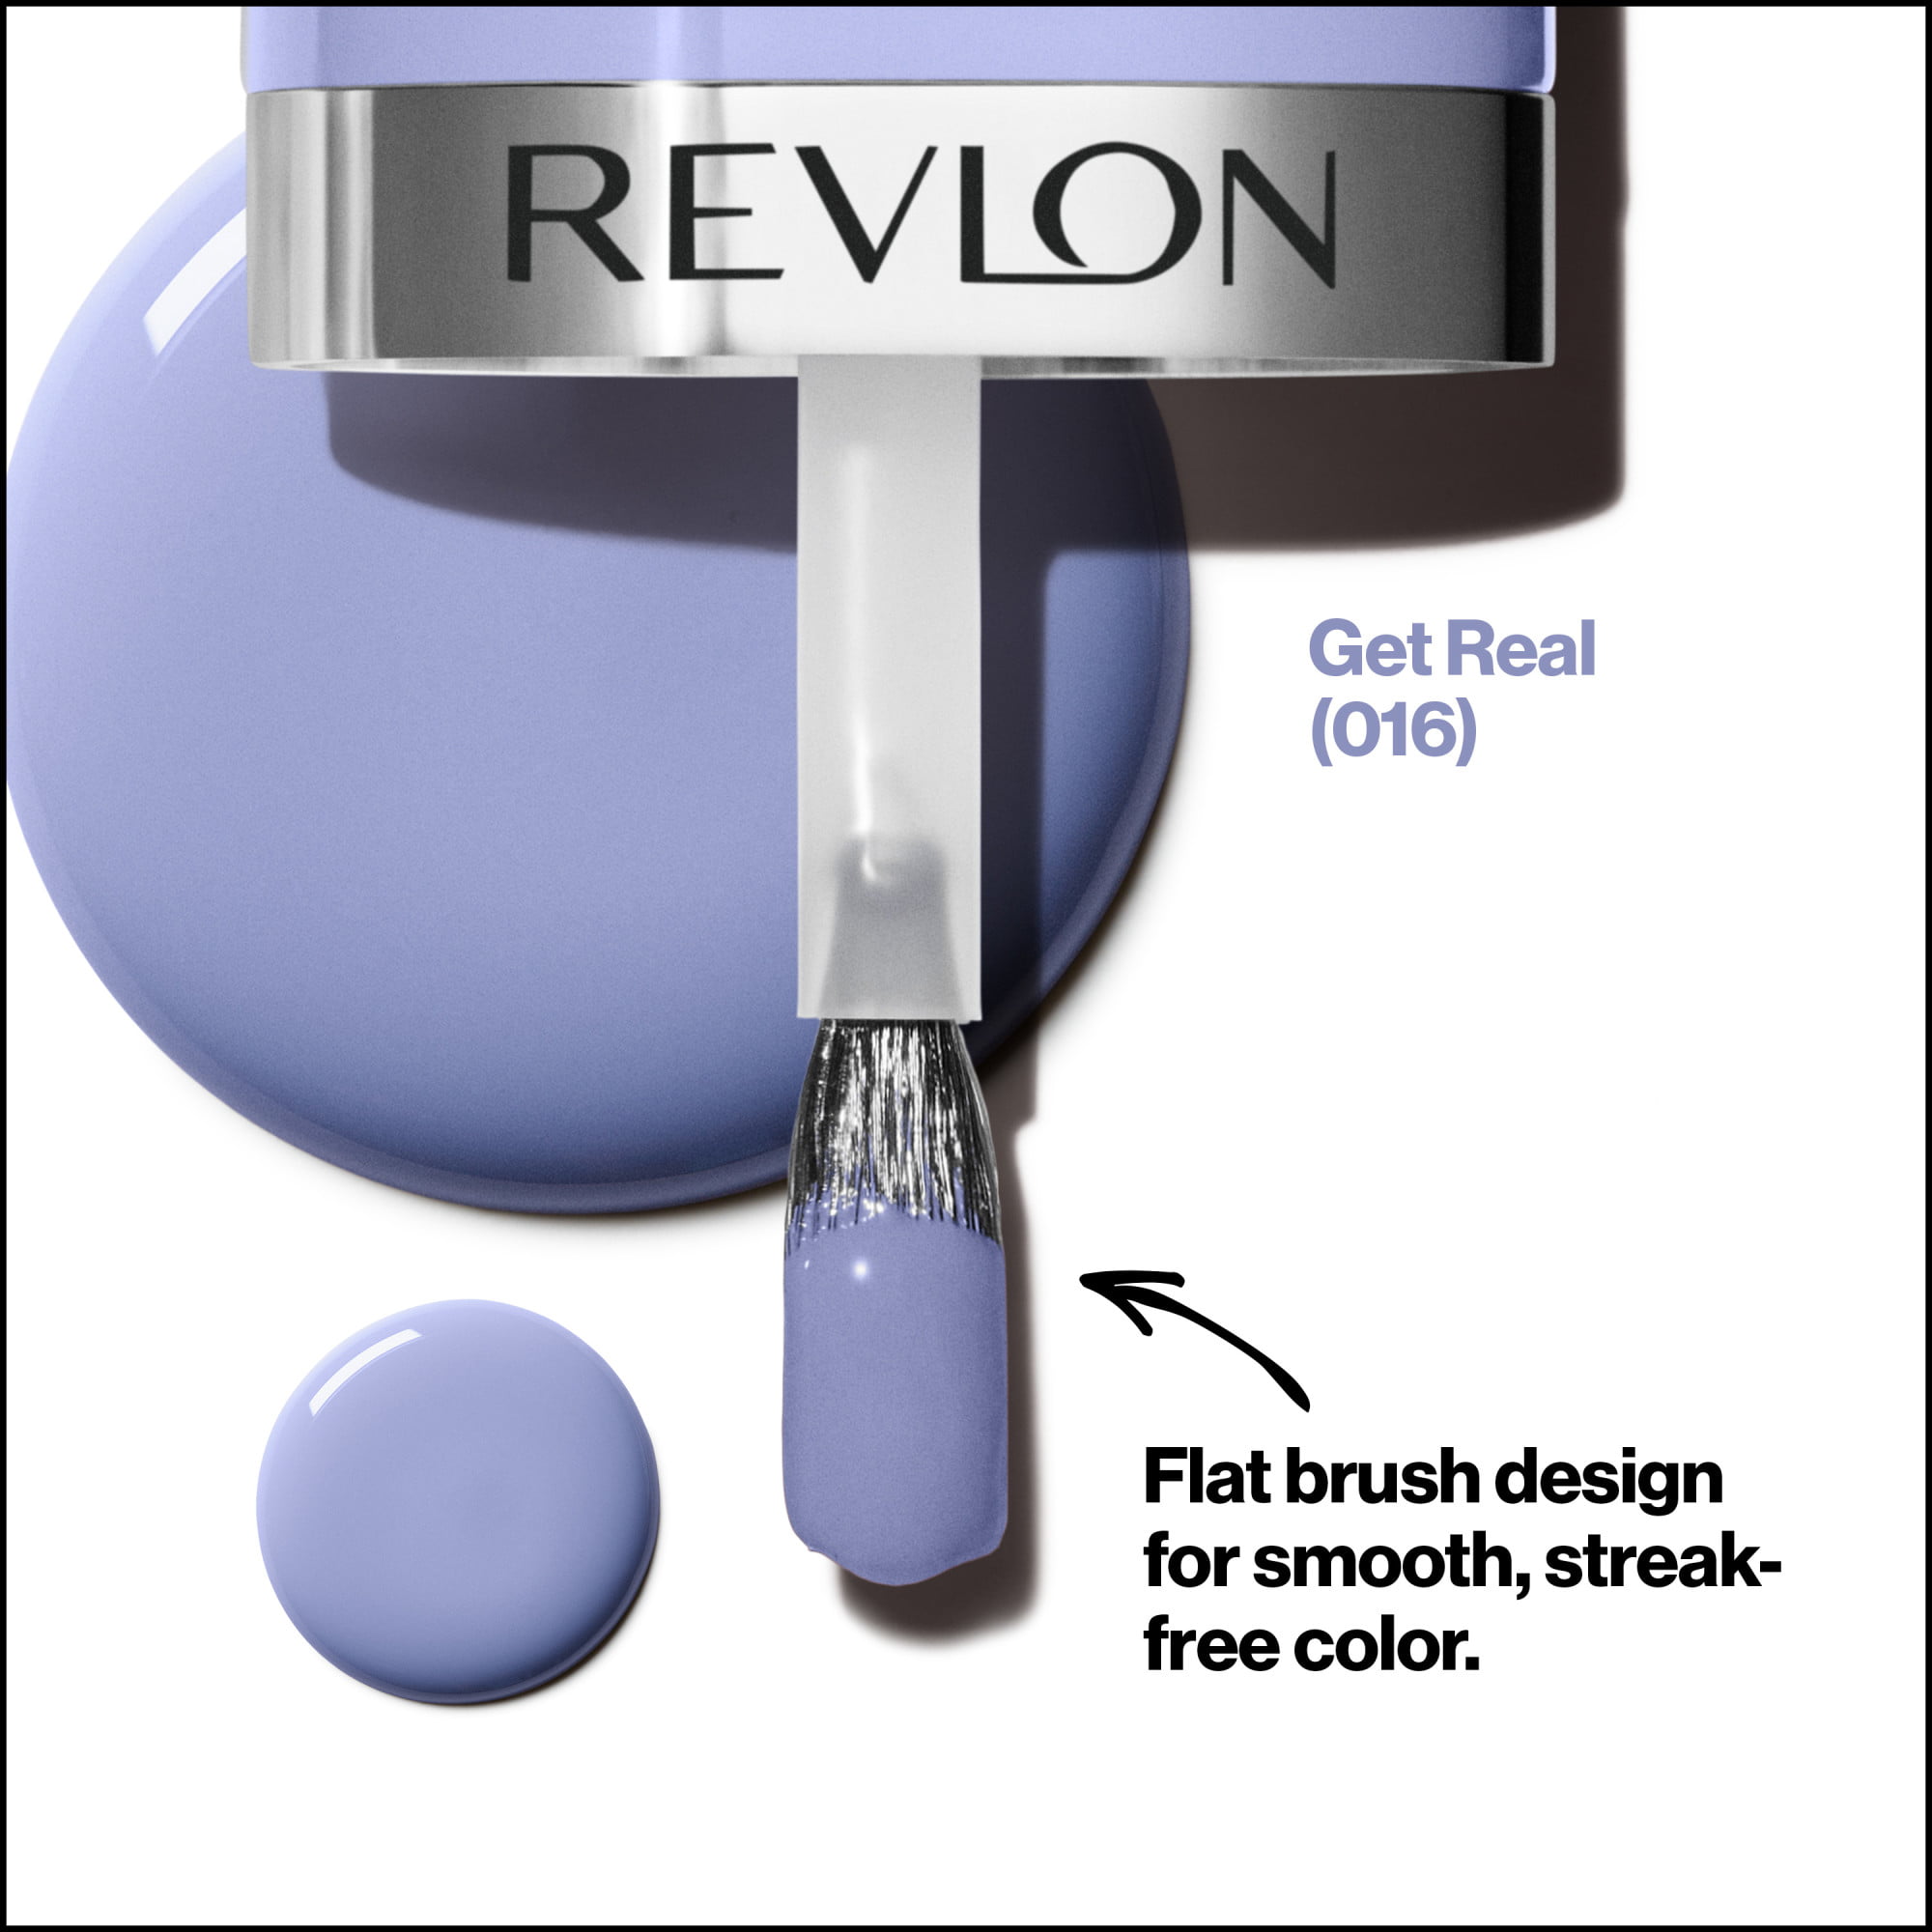 Revlon Ultra HD Snap Vegan Glossy Nail Polish, 016 Get Real, 0.27 fl oz Bottle - image 5 of 14